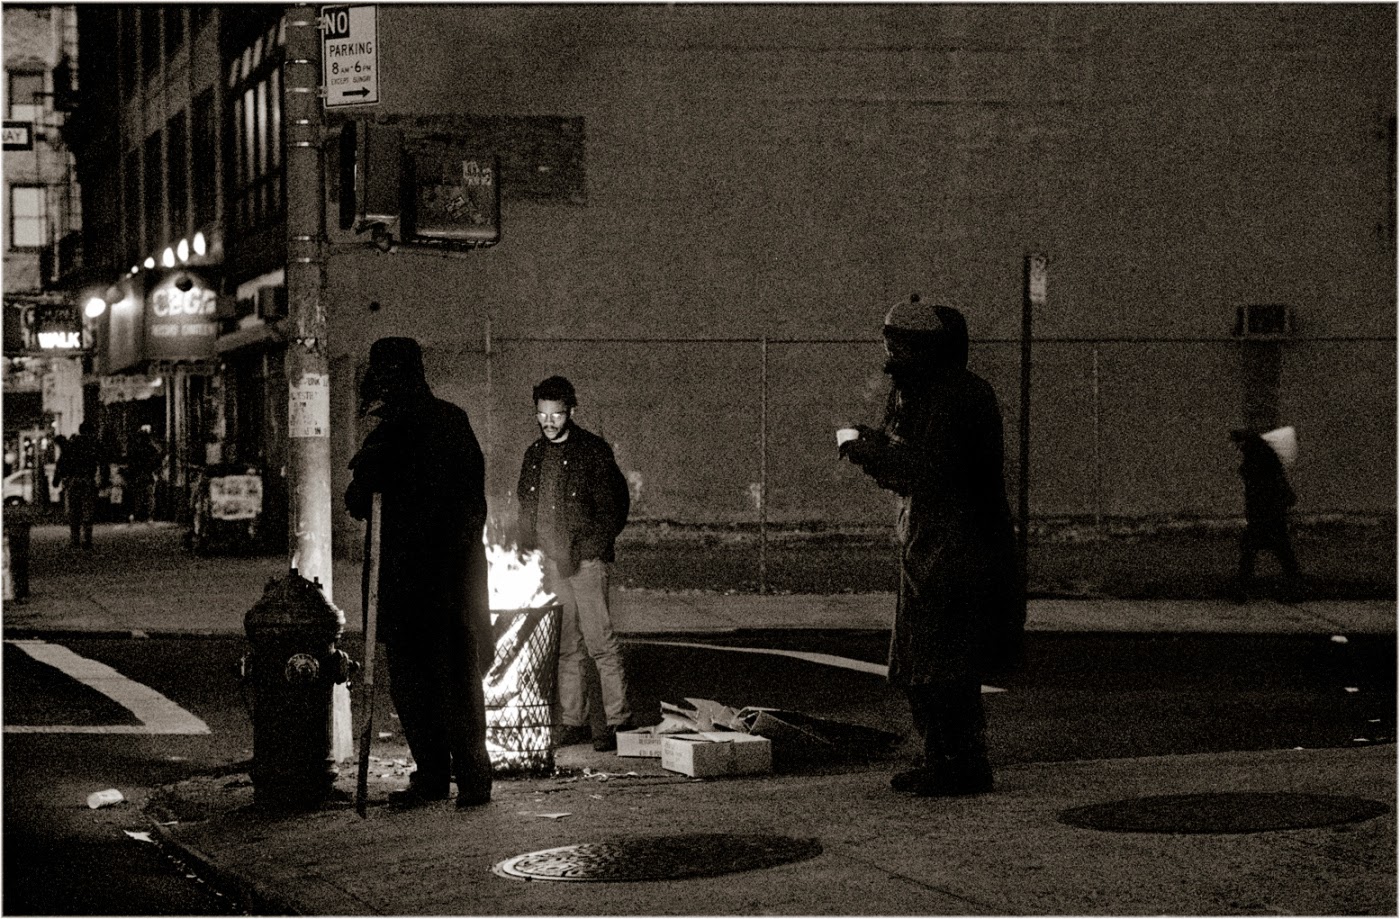 ©Matt Weber. Homeless. NYC Street Photography. Fotografía | Photography